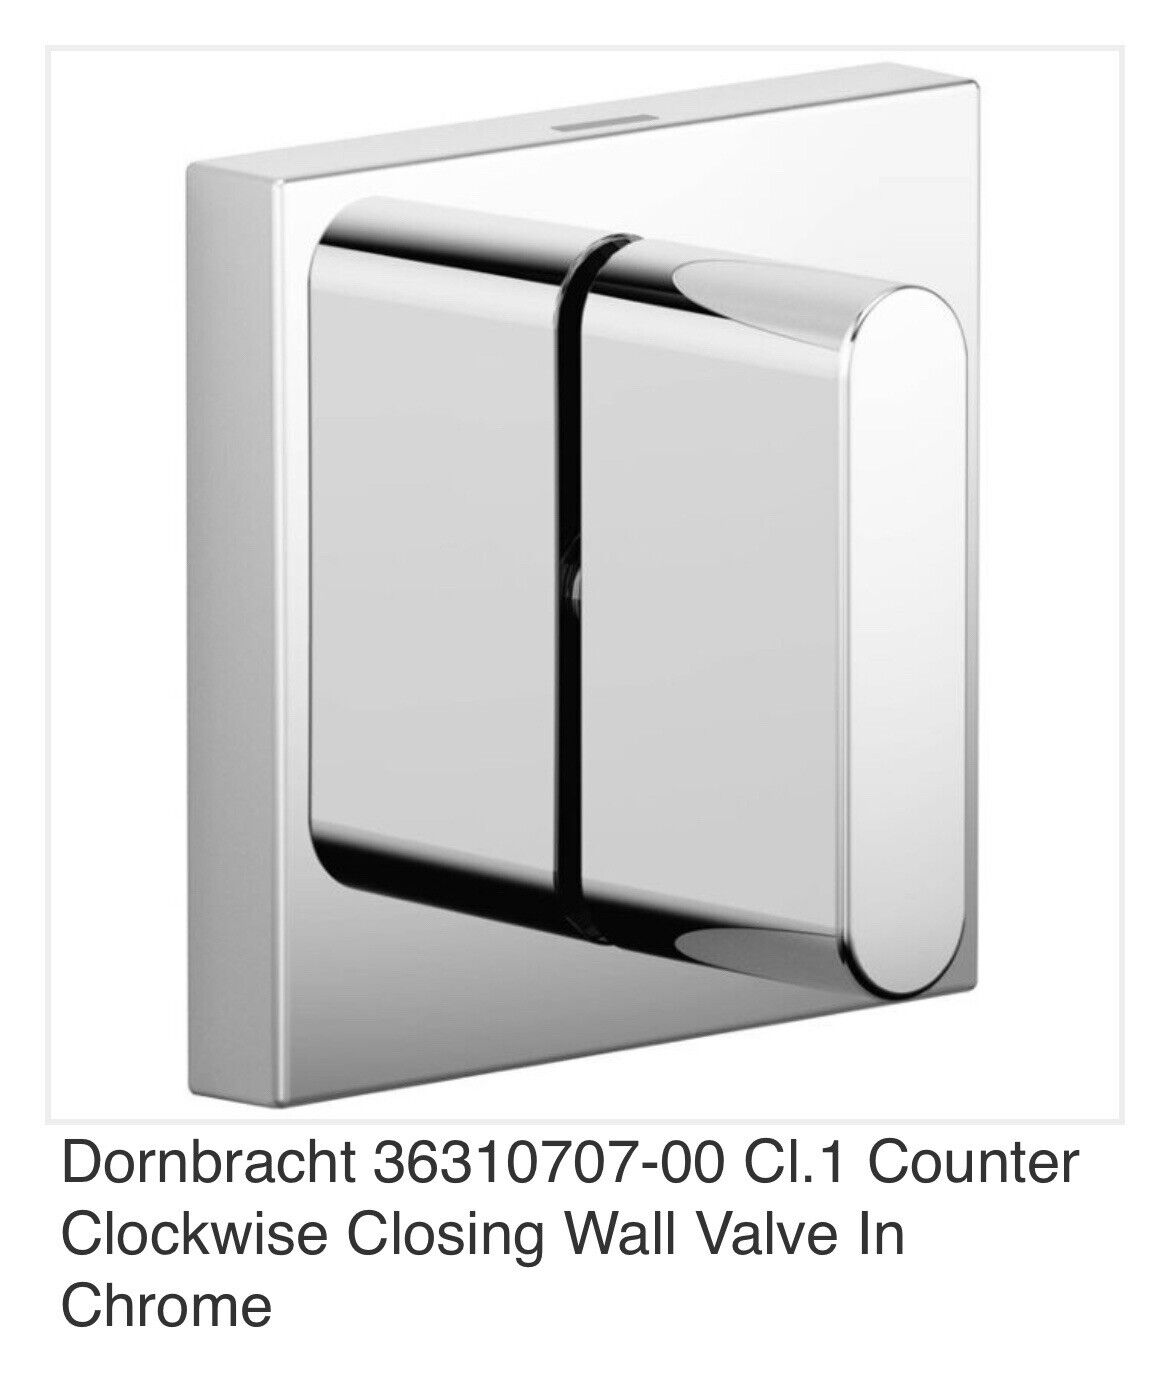 Dornbracht 36310707-00 Cl.1 Counter Clockwise Closing Wall Valve In Chrome